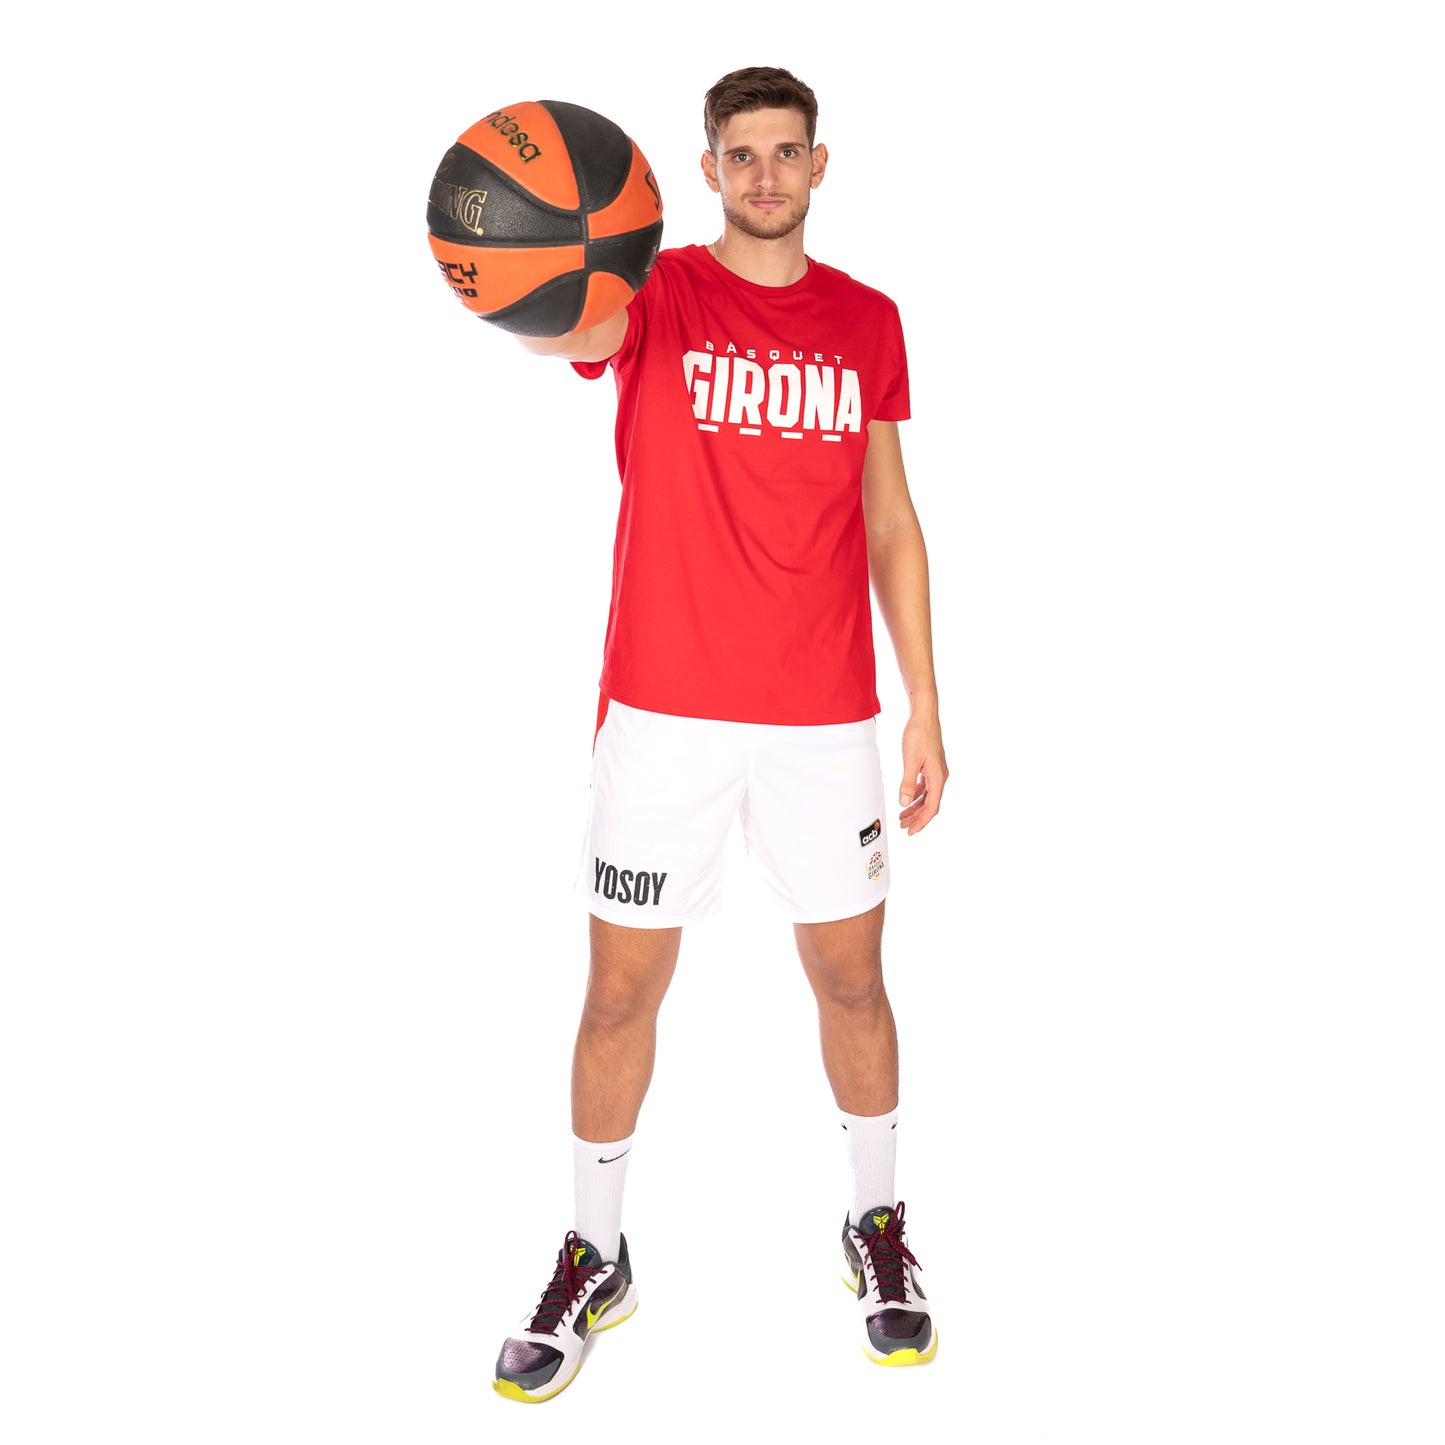 Organic Cotton Basketball Girona Red T-shirt